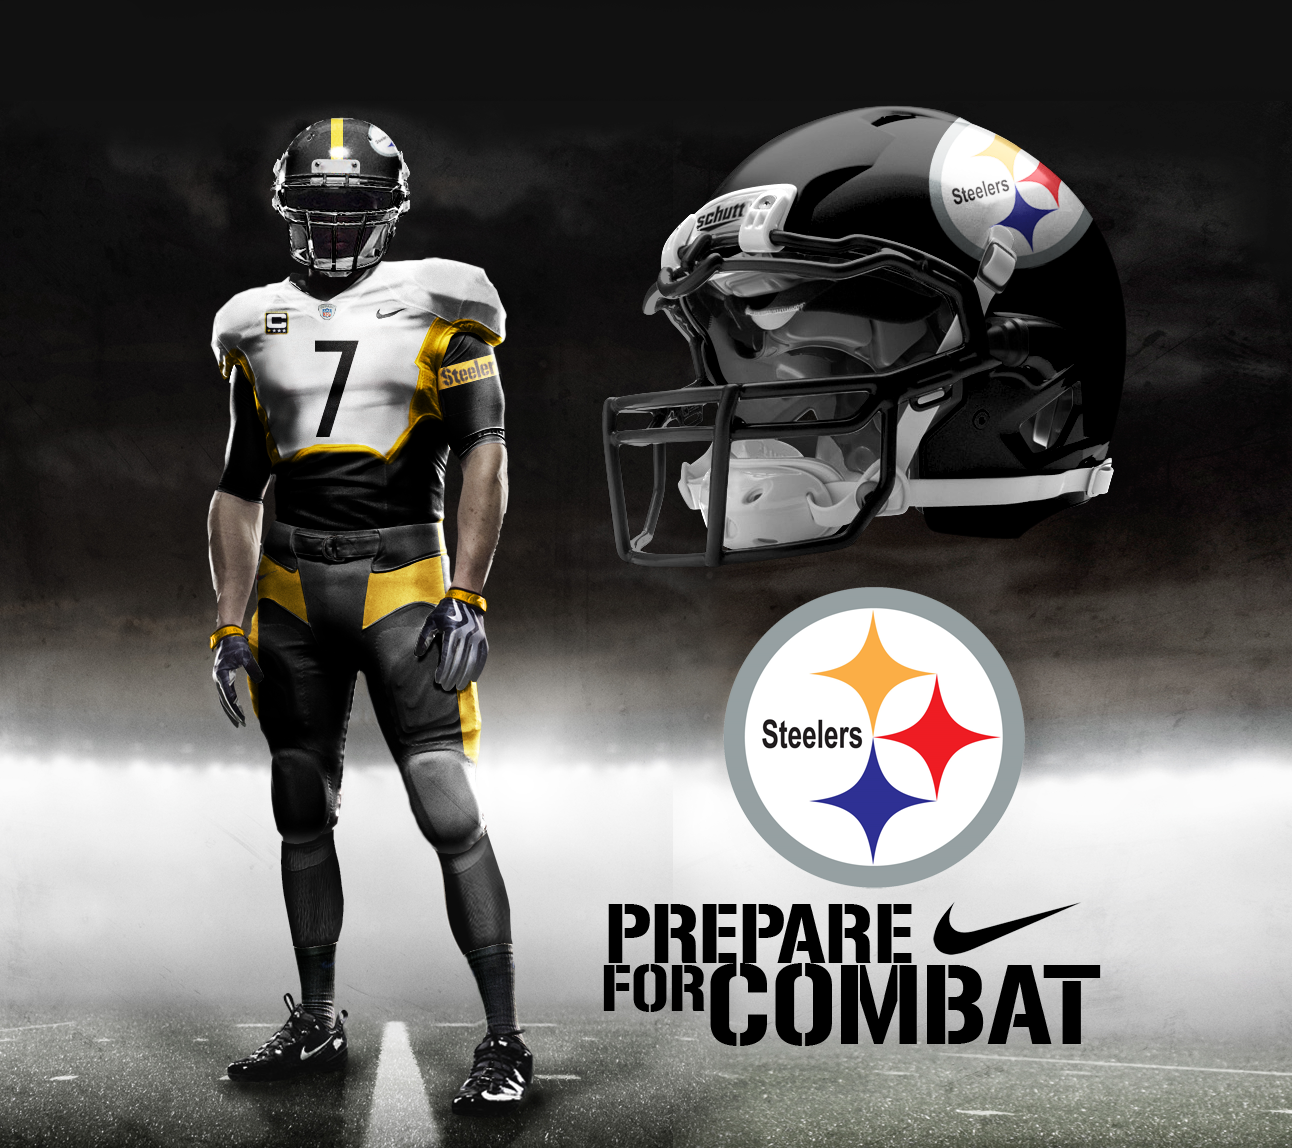 Pittsburgh Steelers Desktop Image Wallpaper